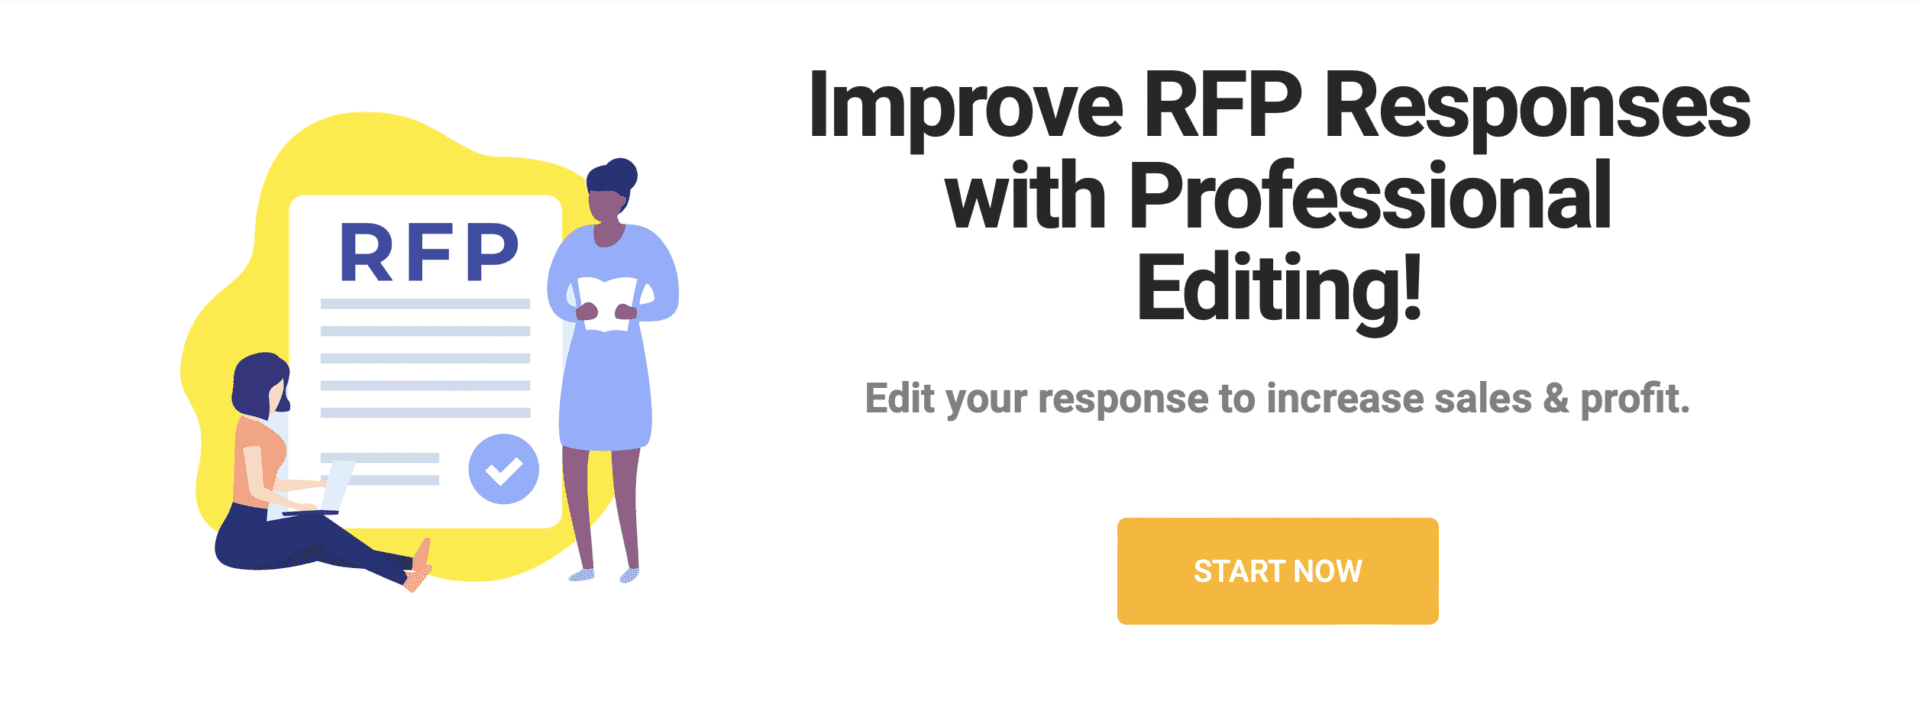 RFP Response – Get Professional Editing Help